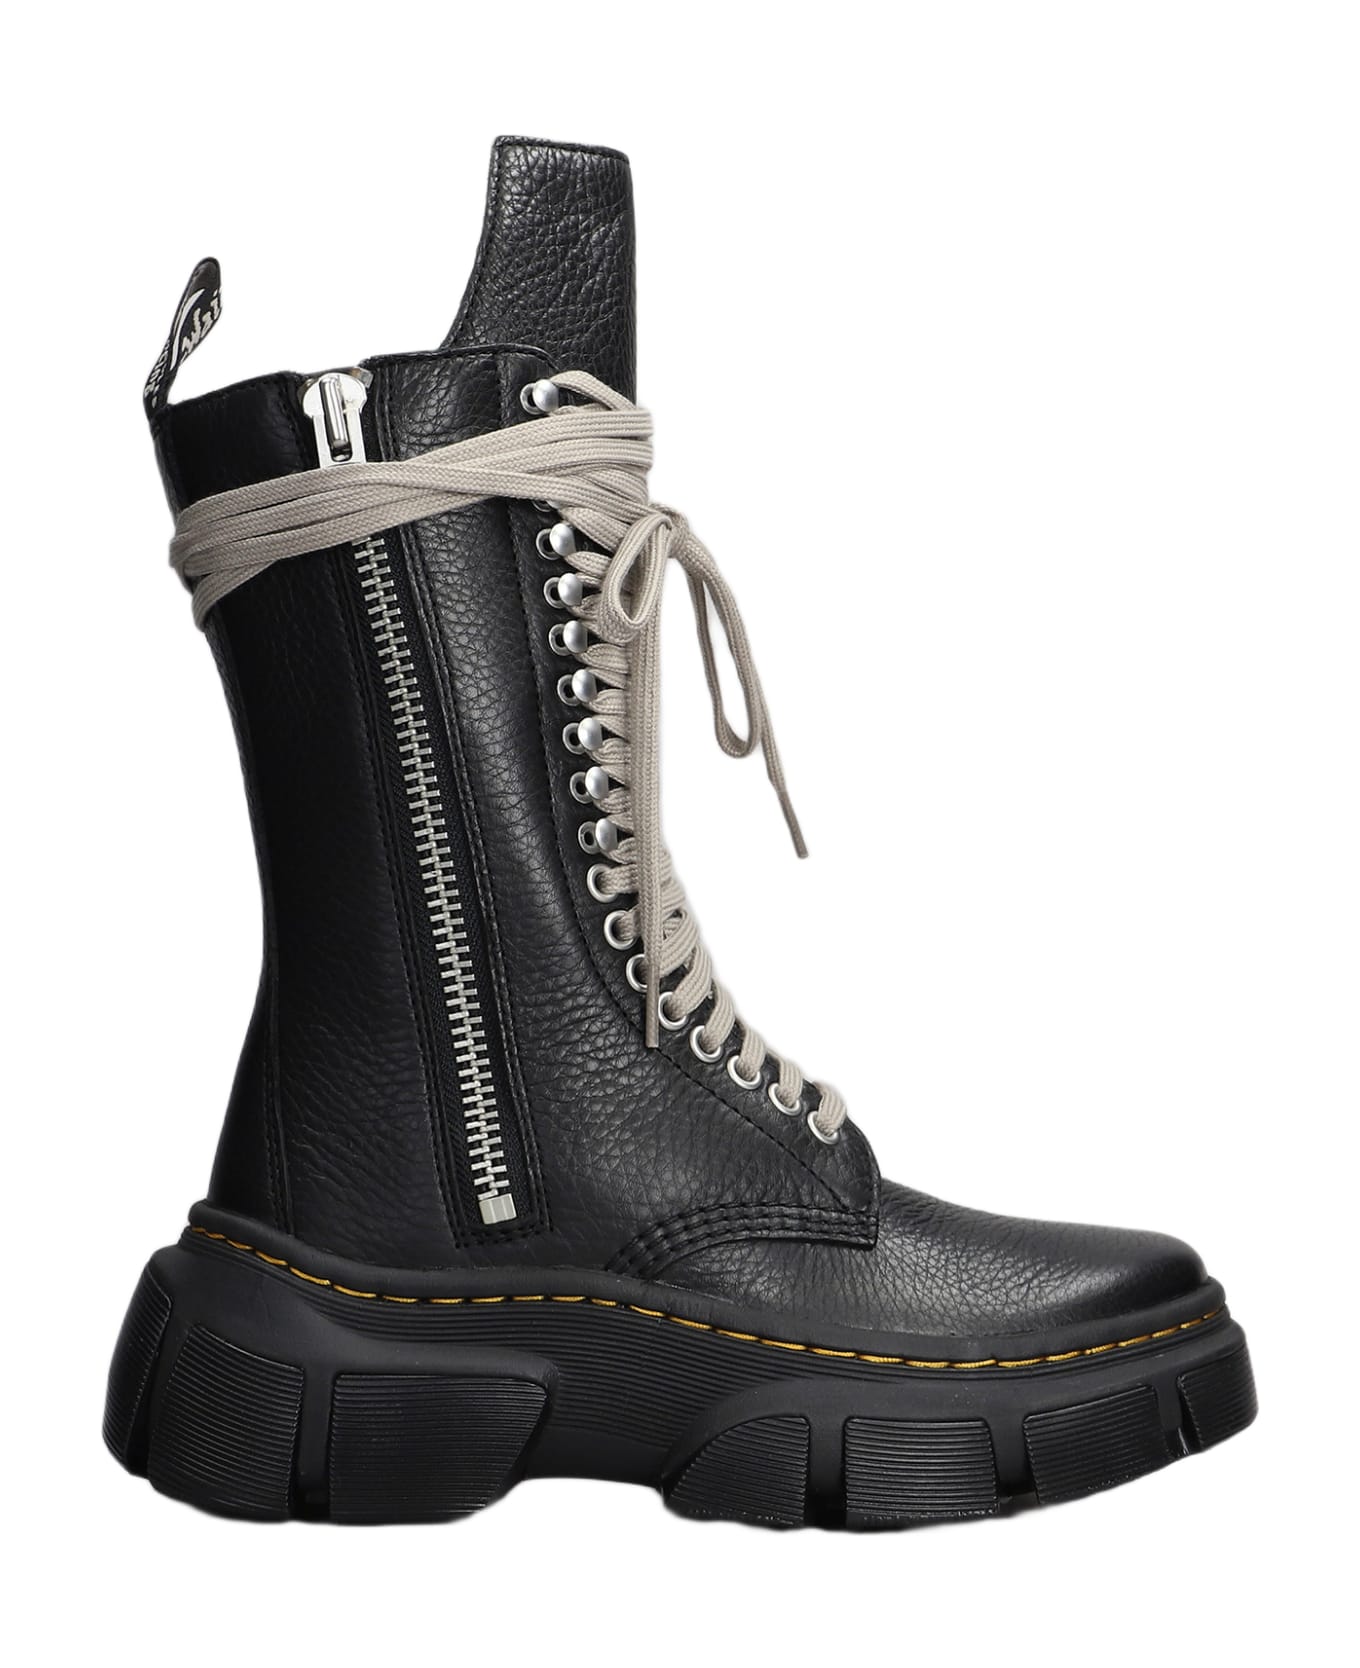 Rick Owens x Dr. Martens Dmxl Length Boot Combat Boots In Black Leather - black